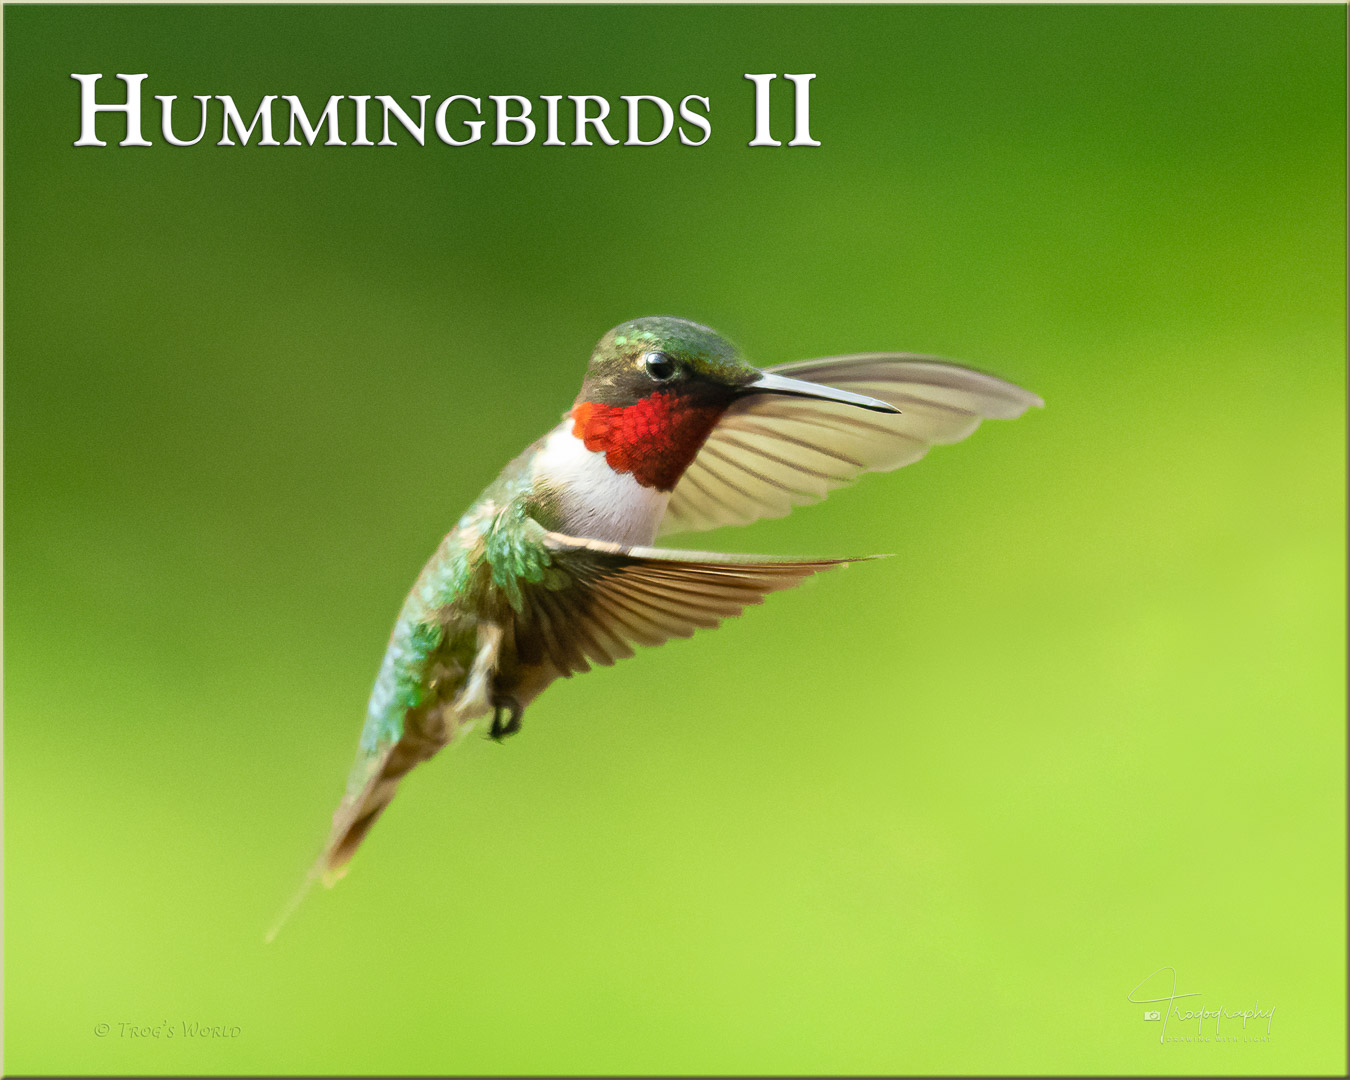 Male Ruby-throated Hummingbird in flight